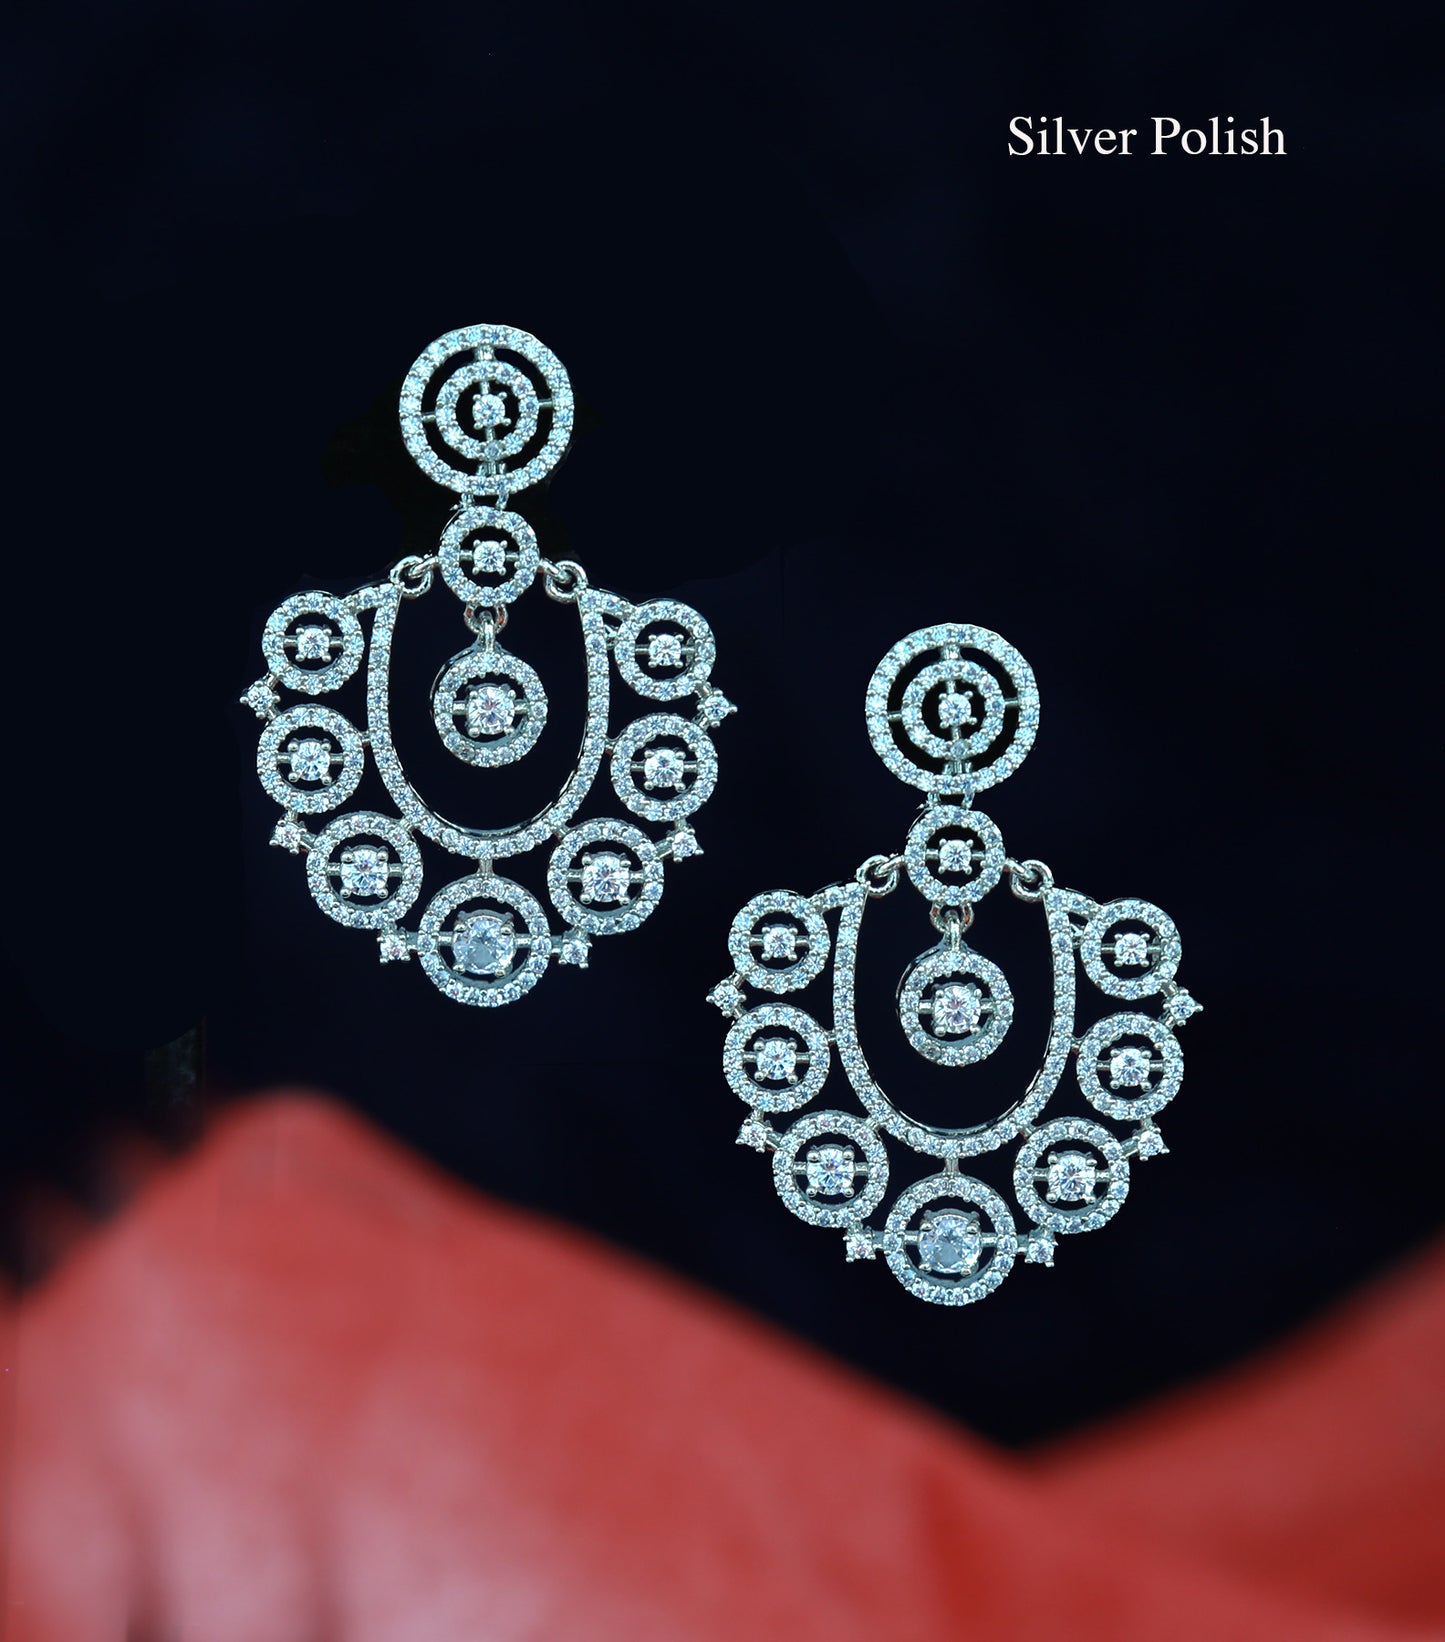 American Diamond Silver Earrings | Rose Gold Indian Earrings